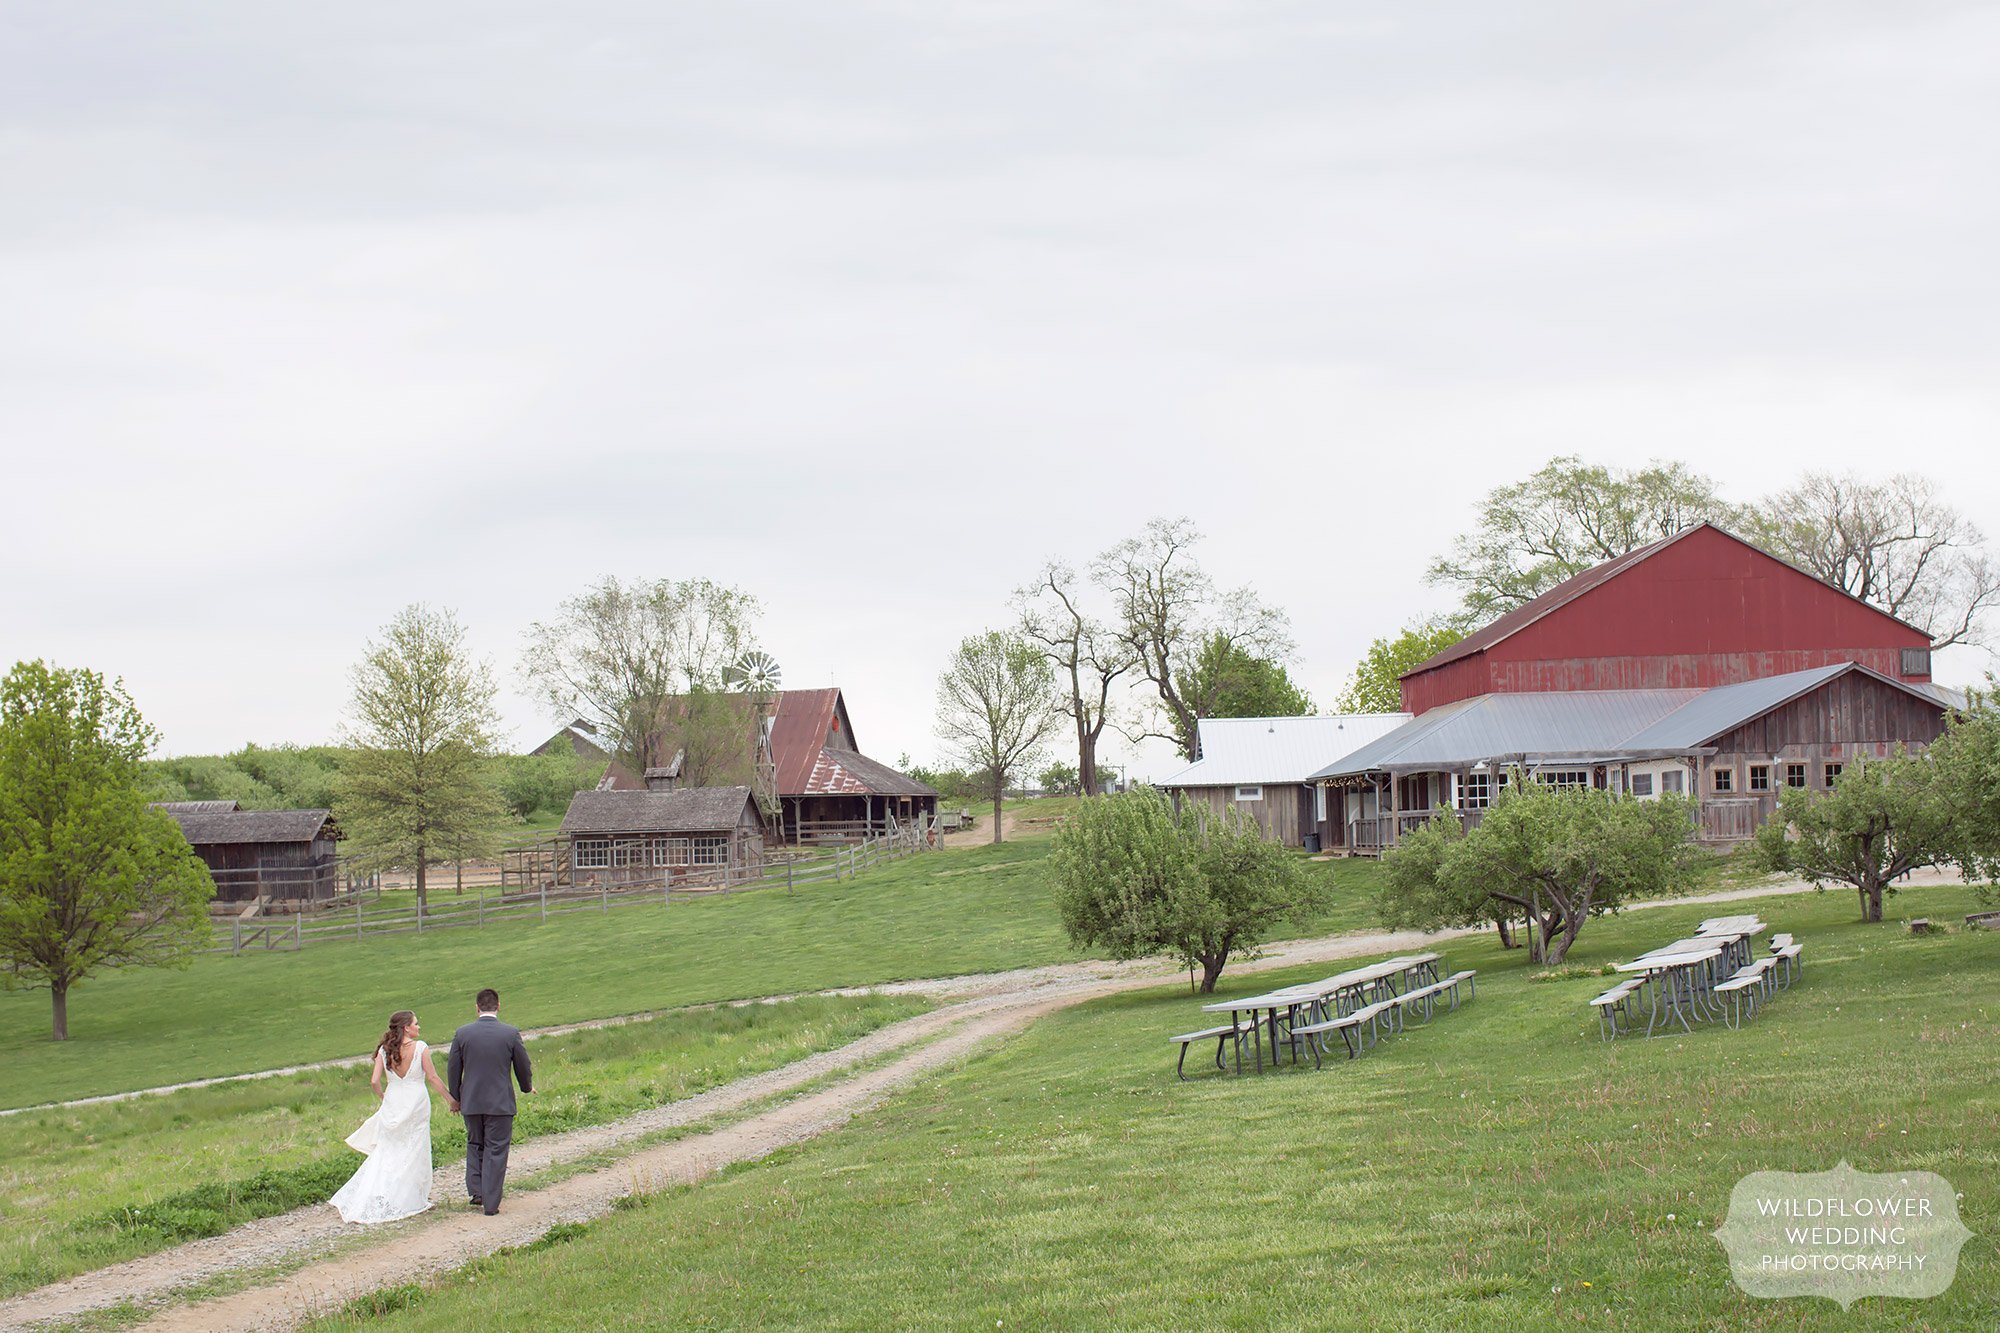 The bride and groom walk along the path at their Kansas City farm wedding at the Weston Red Barn.